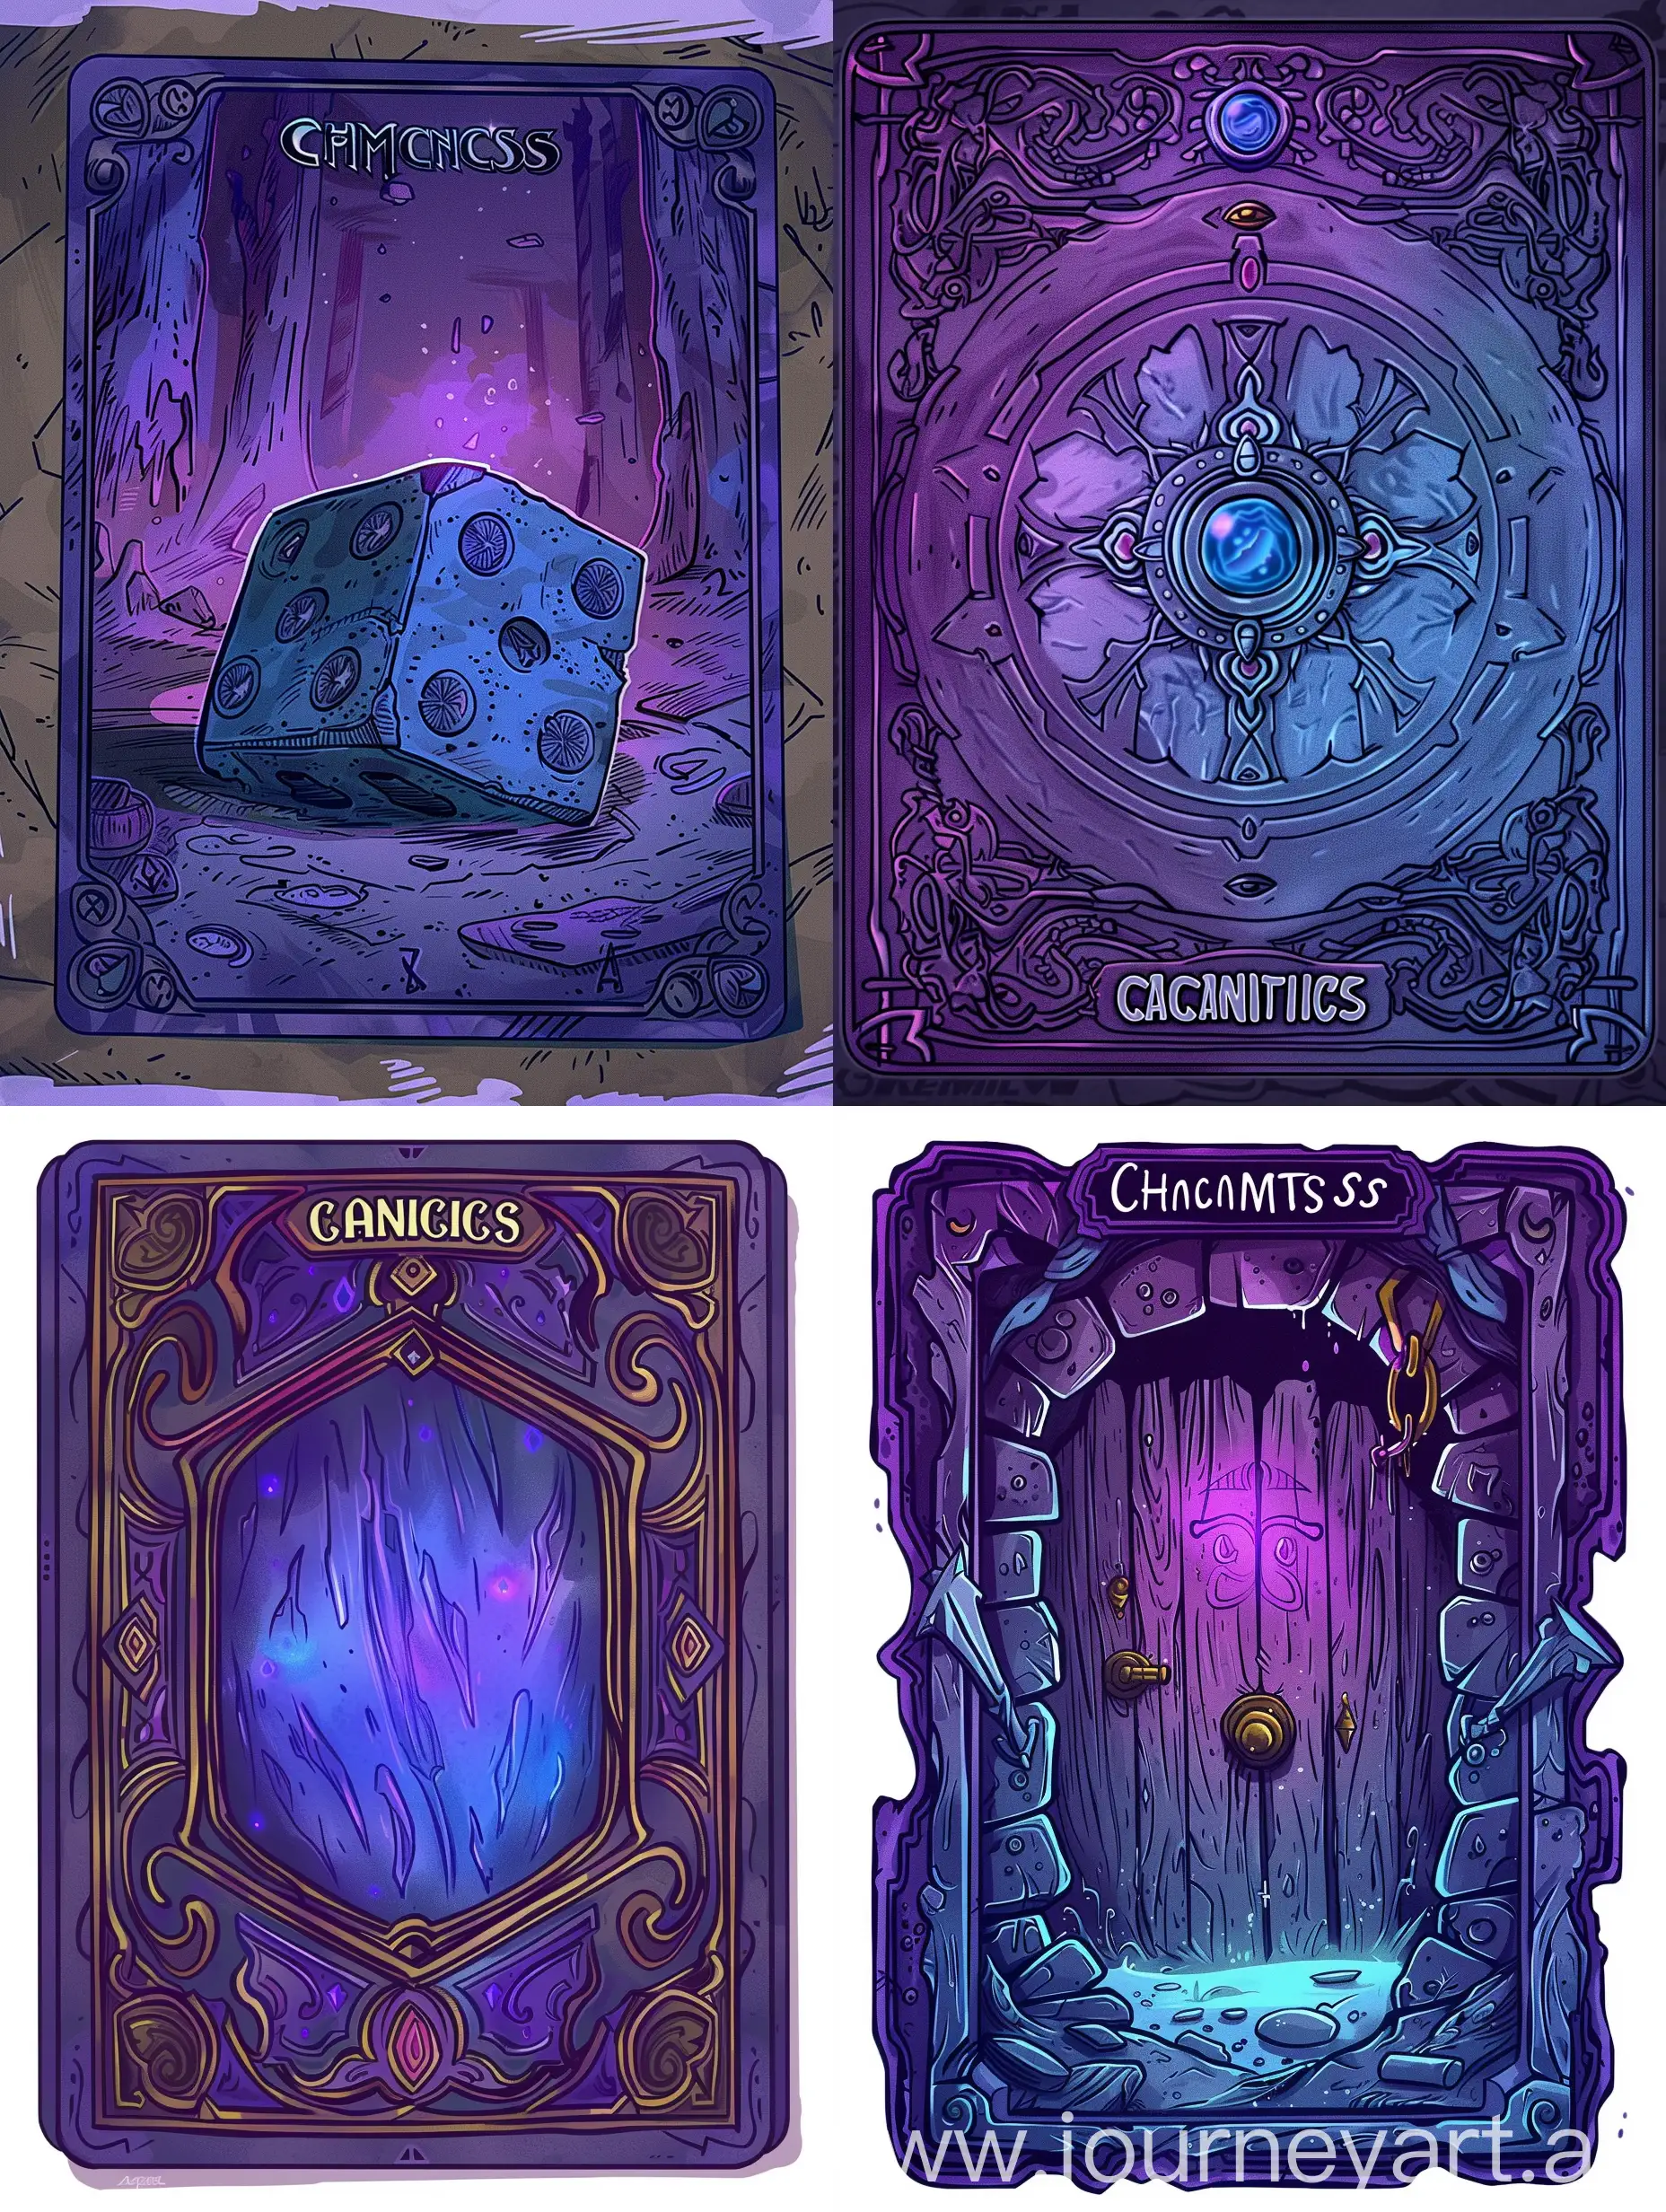 Chances-Board-Game-Card-Back-in-PurpleBlue-Colors